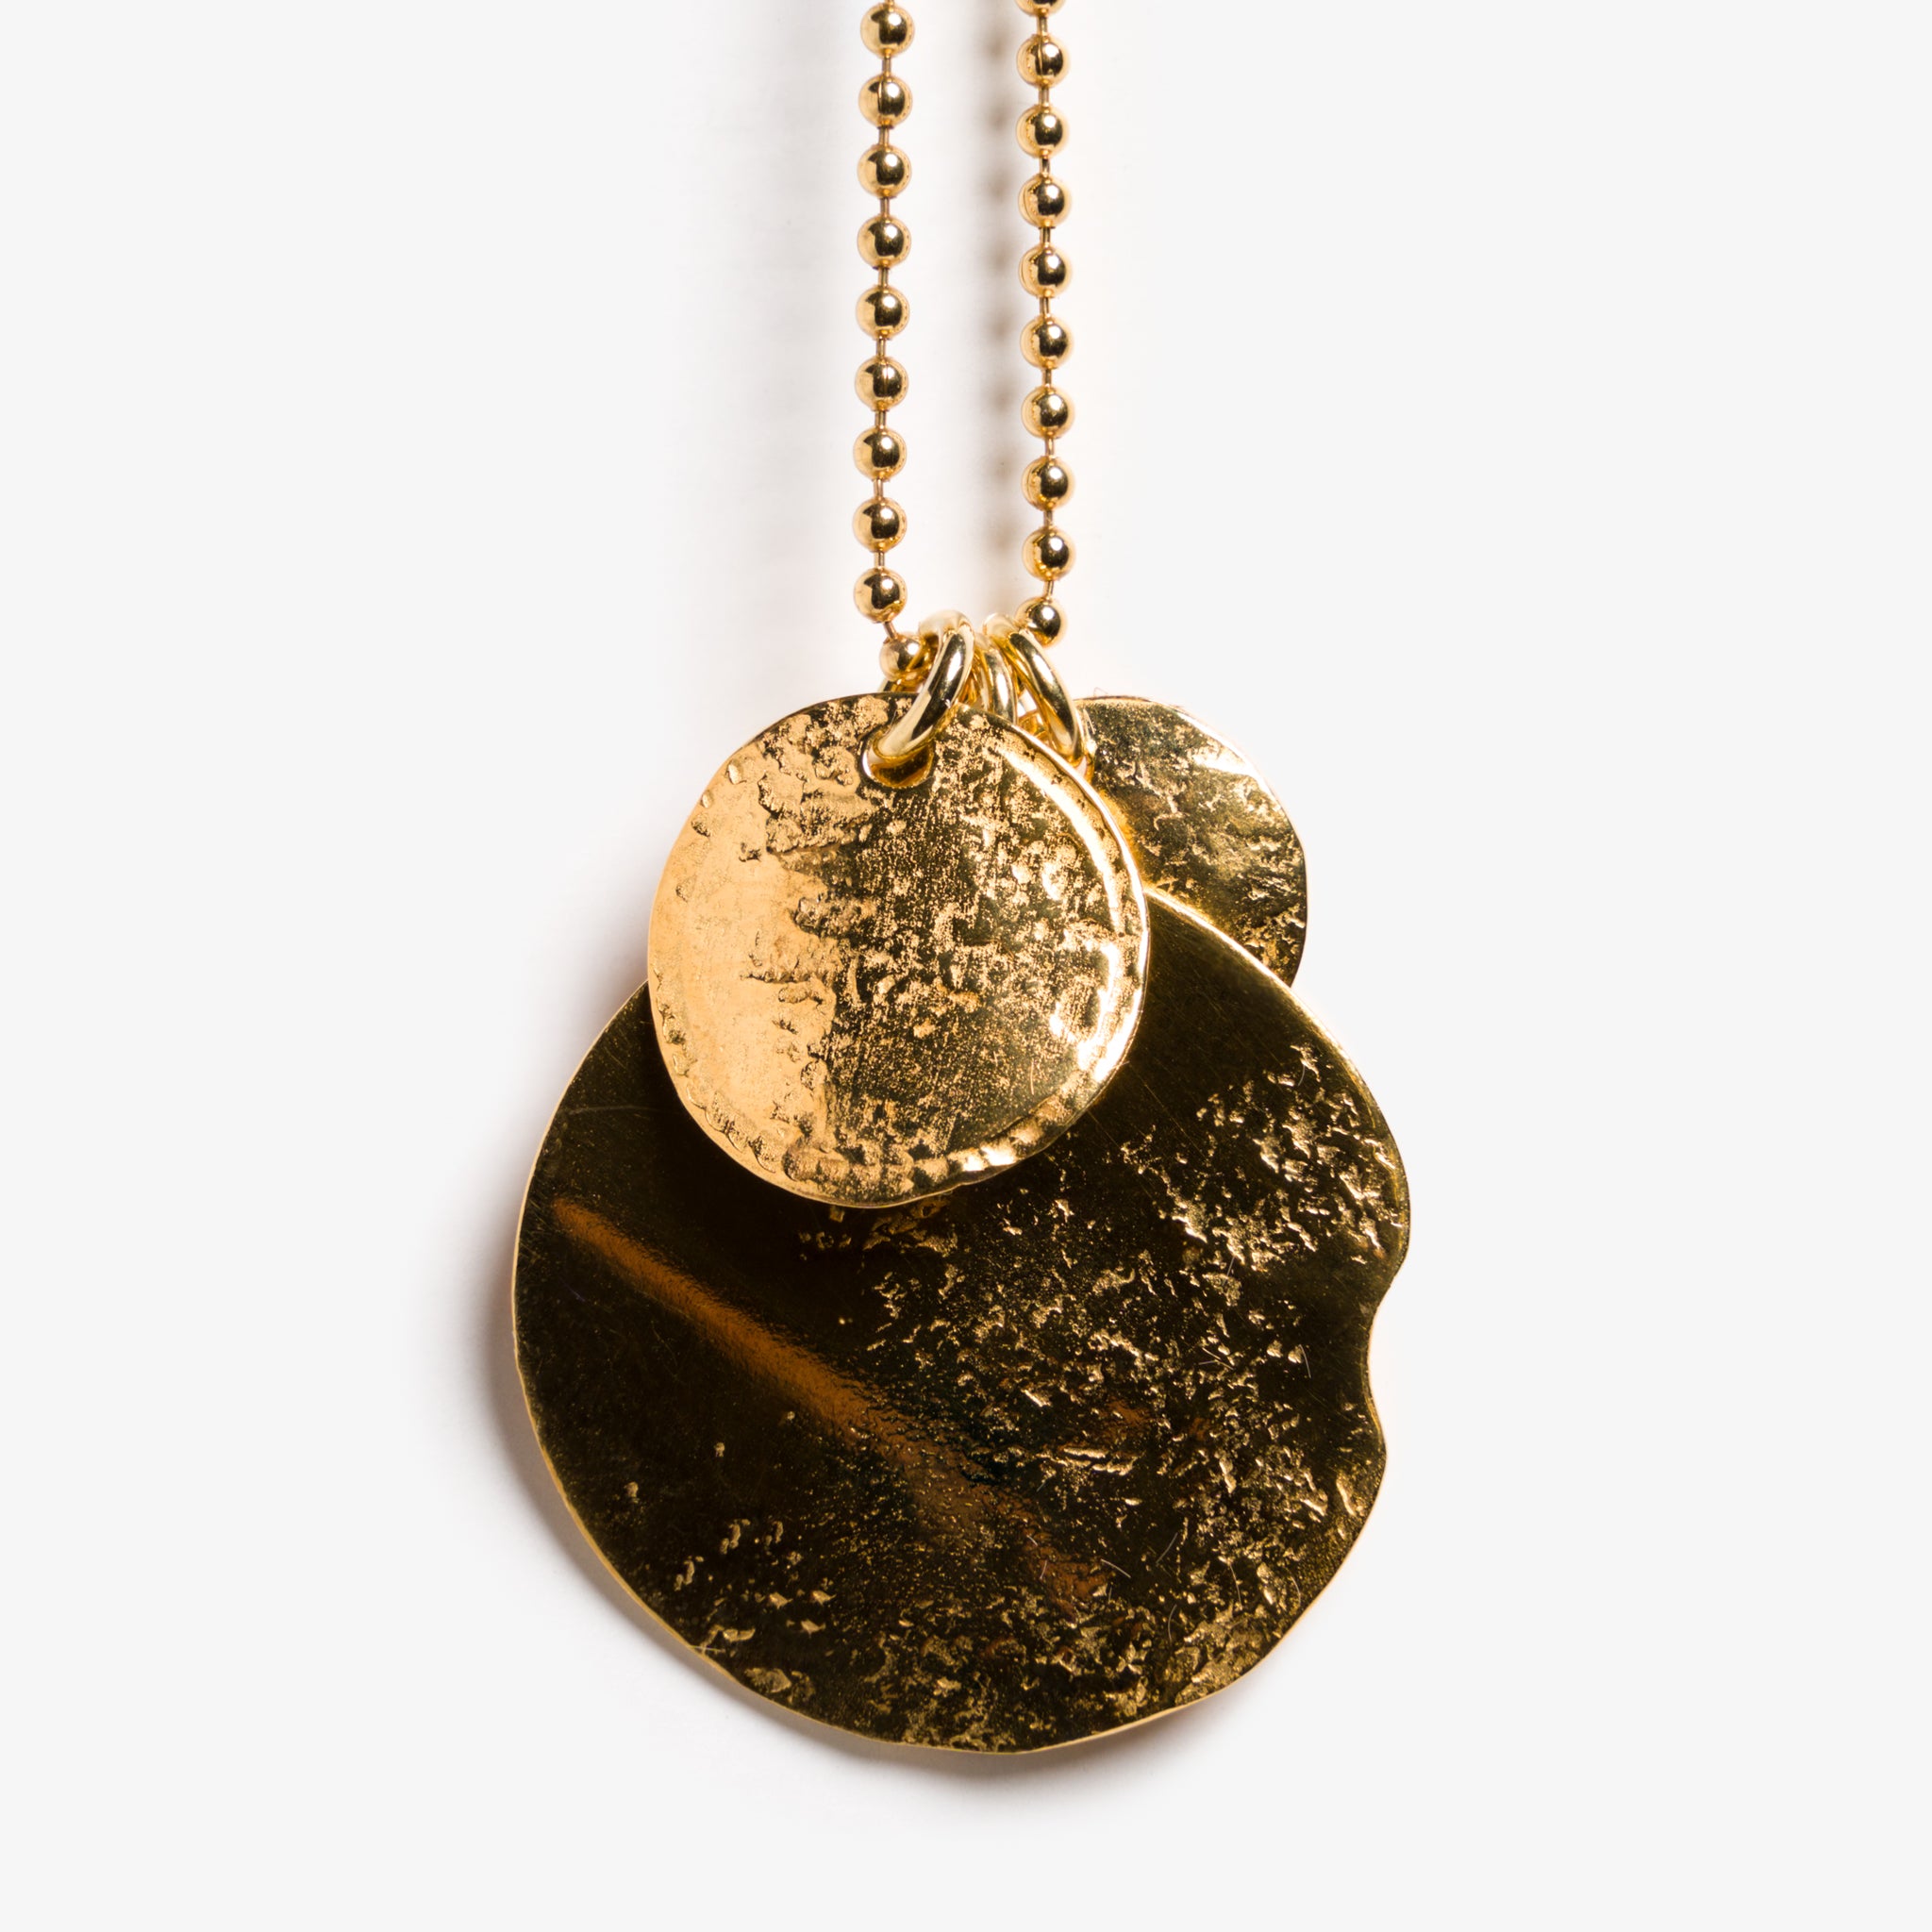 Gold-Plated Leaf Necklace by Sylvsmidja